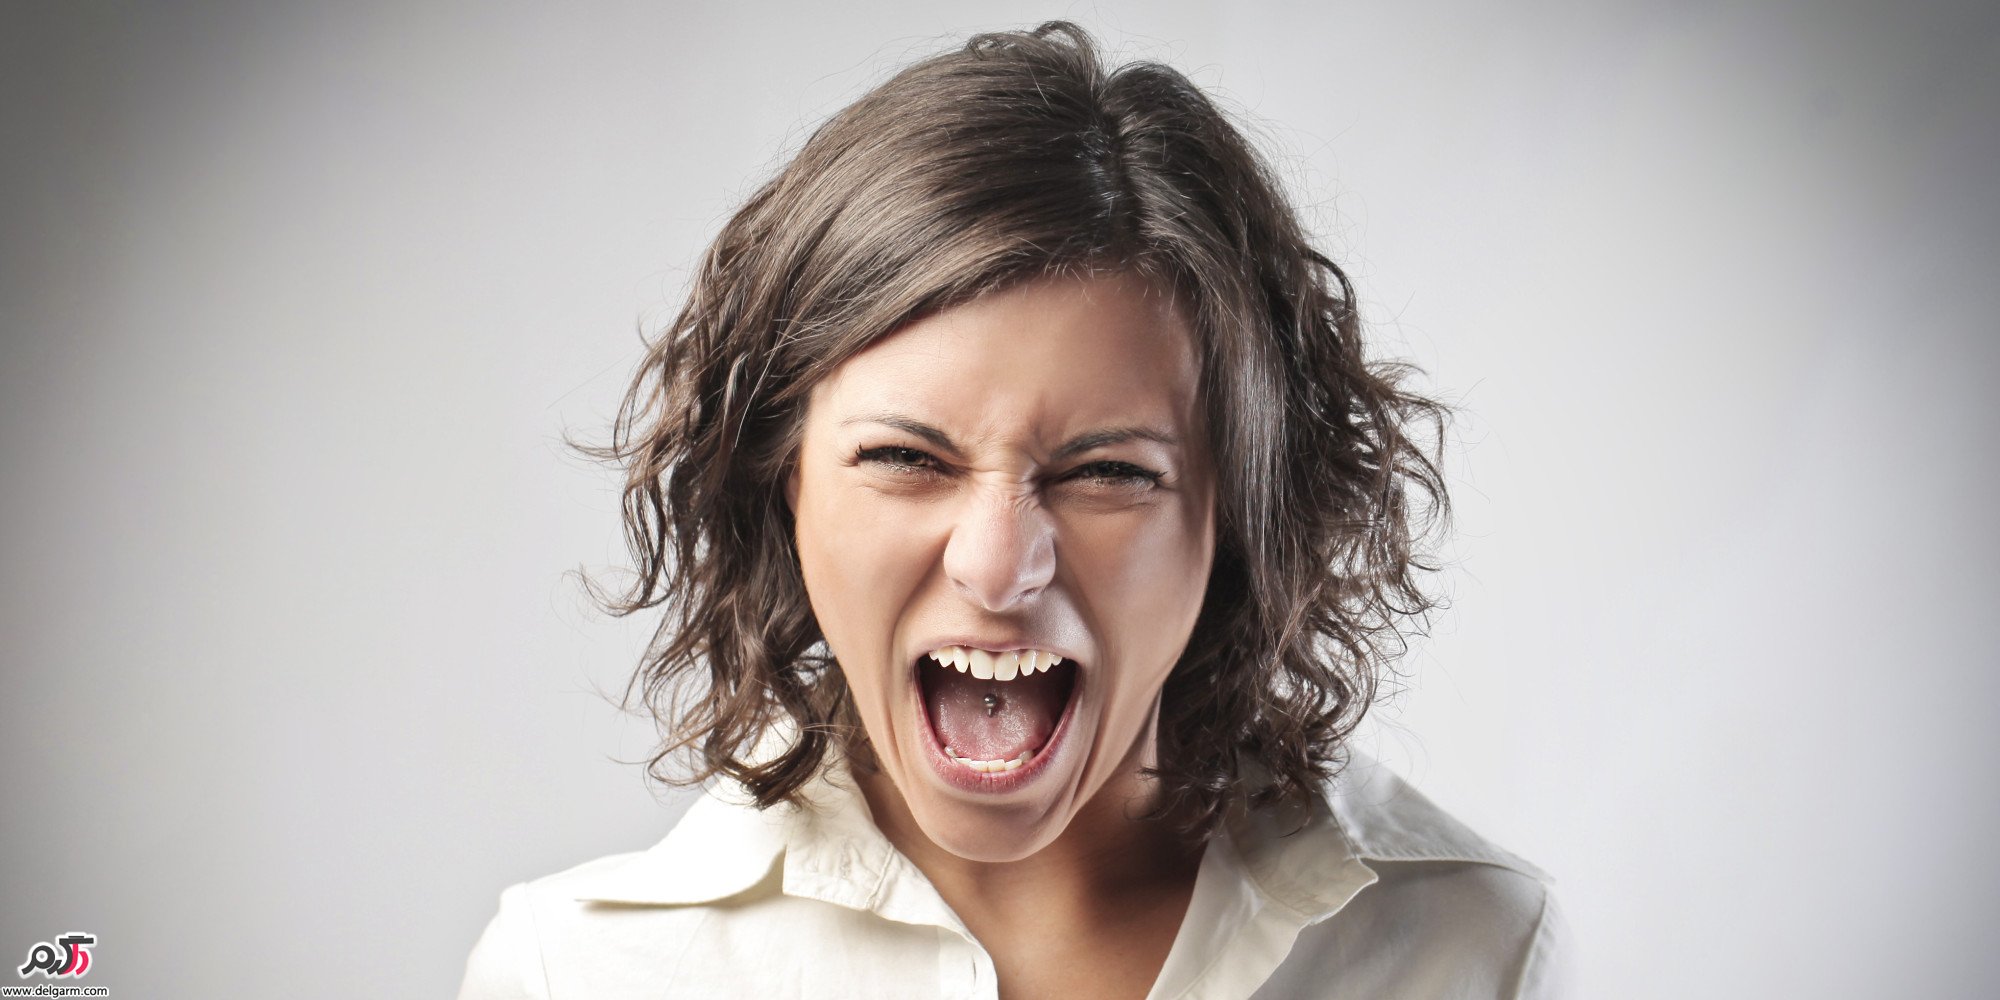 علت عصبانیت زنان چیست